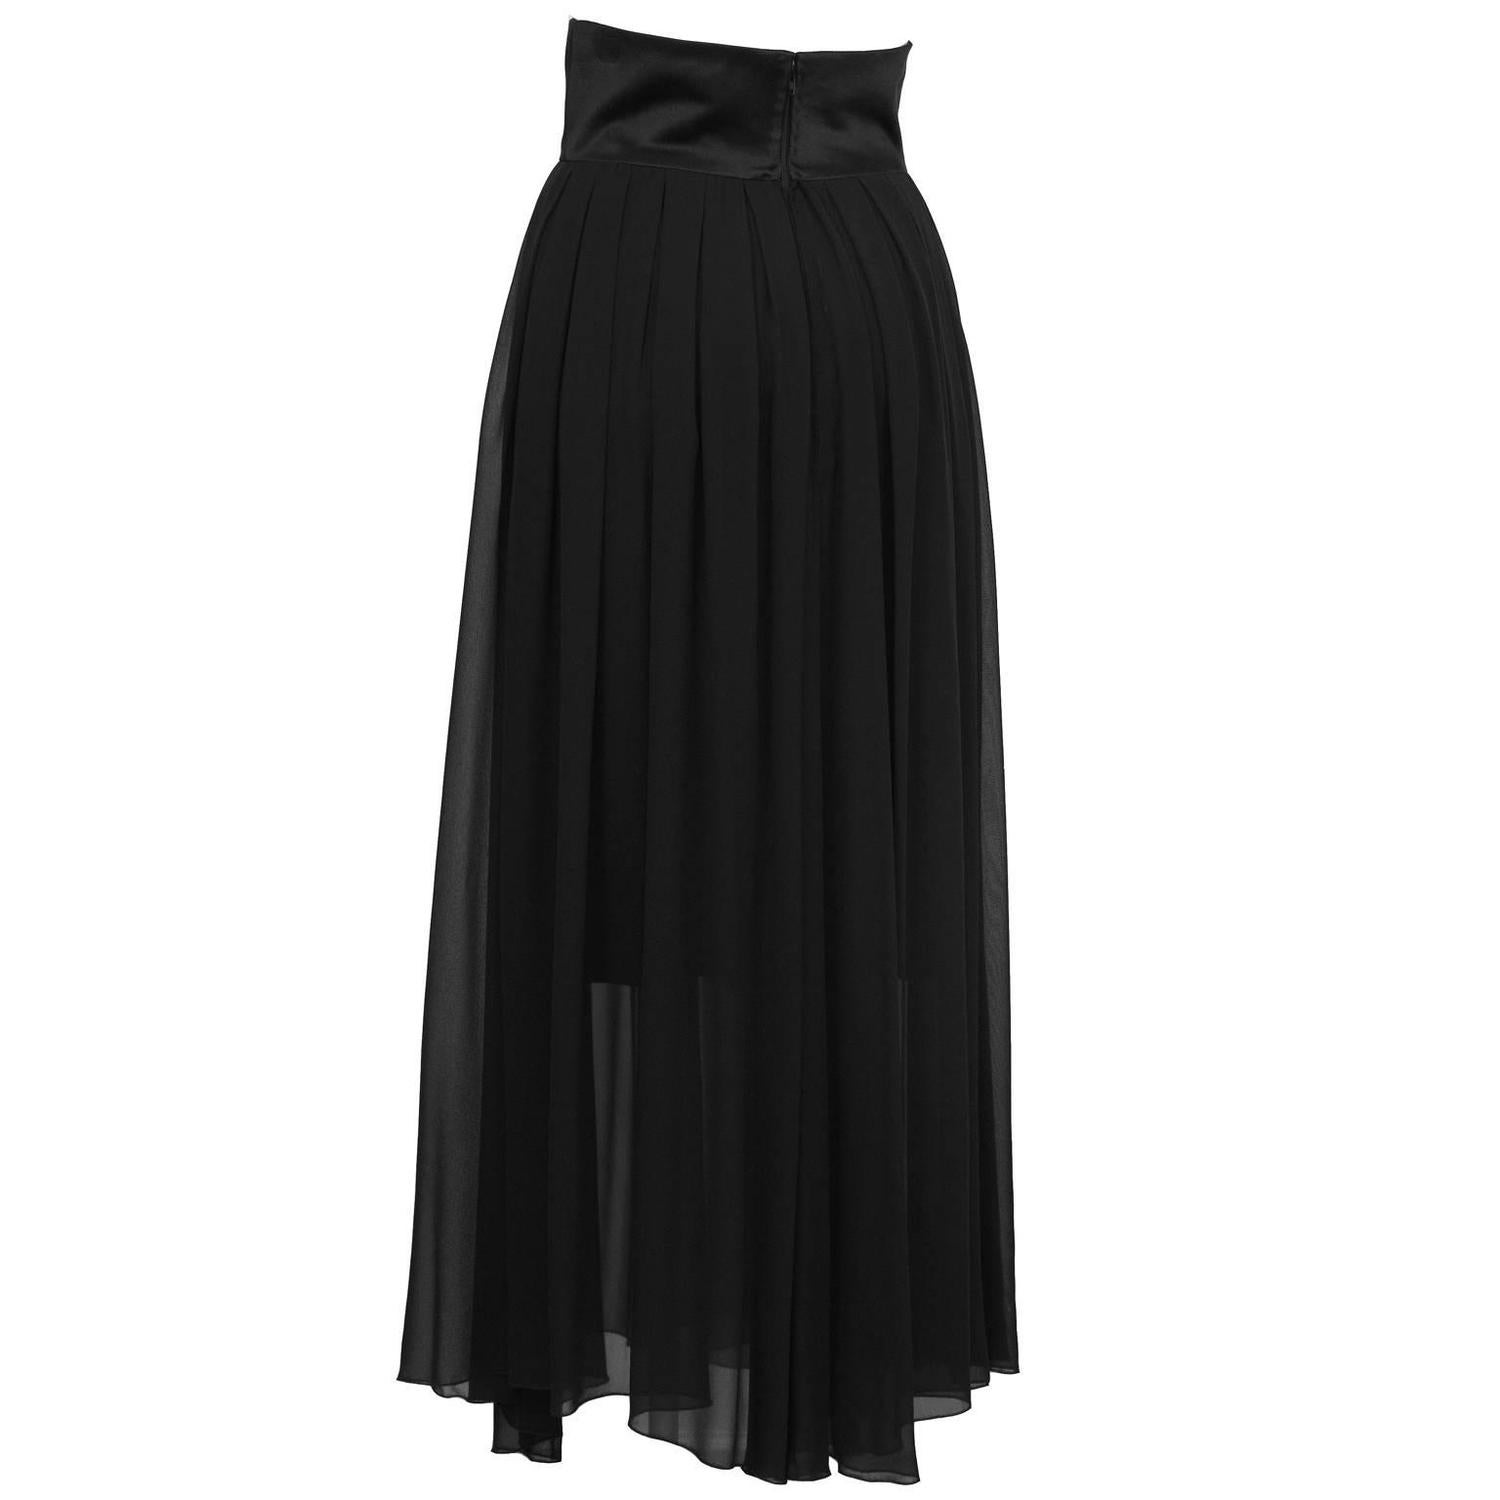 1980’s Chanel Black Chiffon Skirt For Sale at 1stdibs